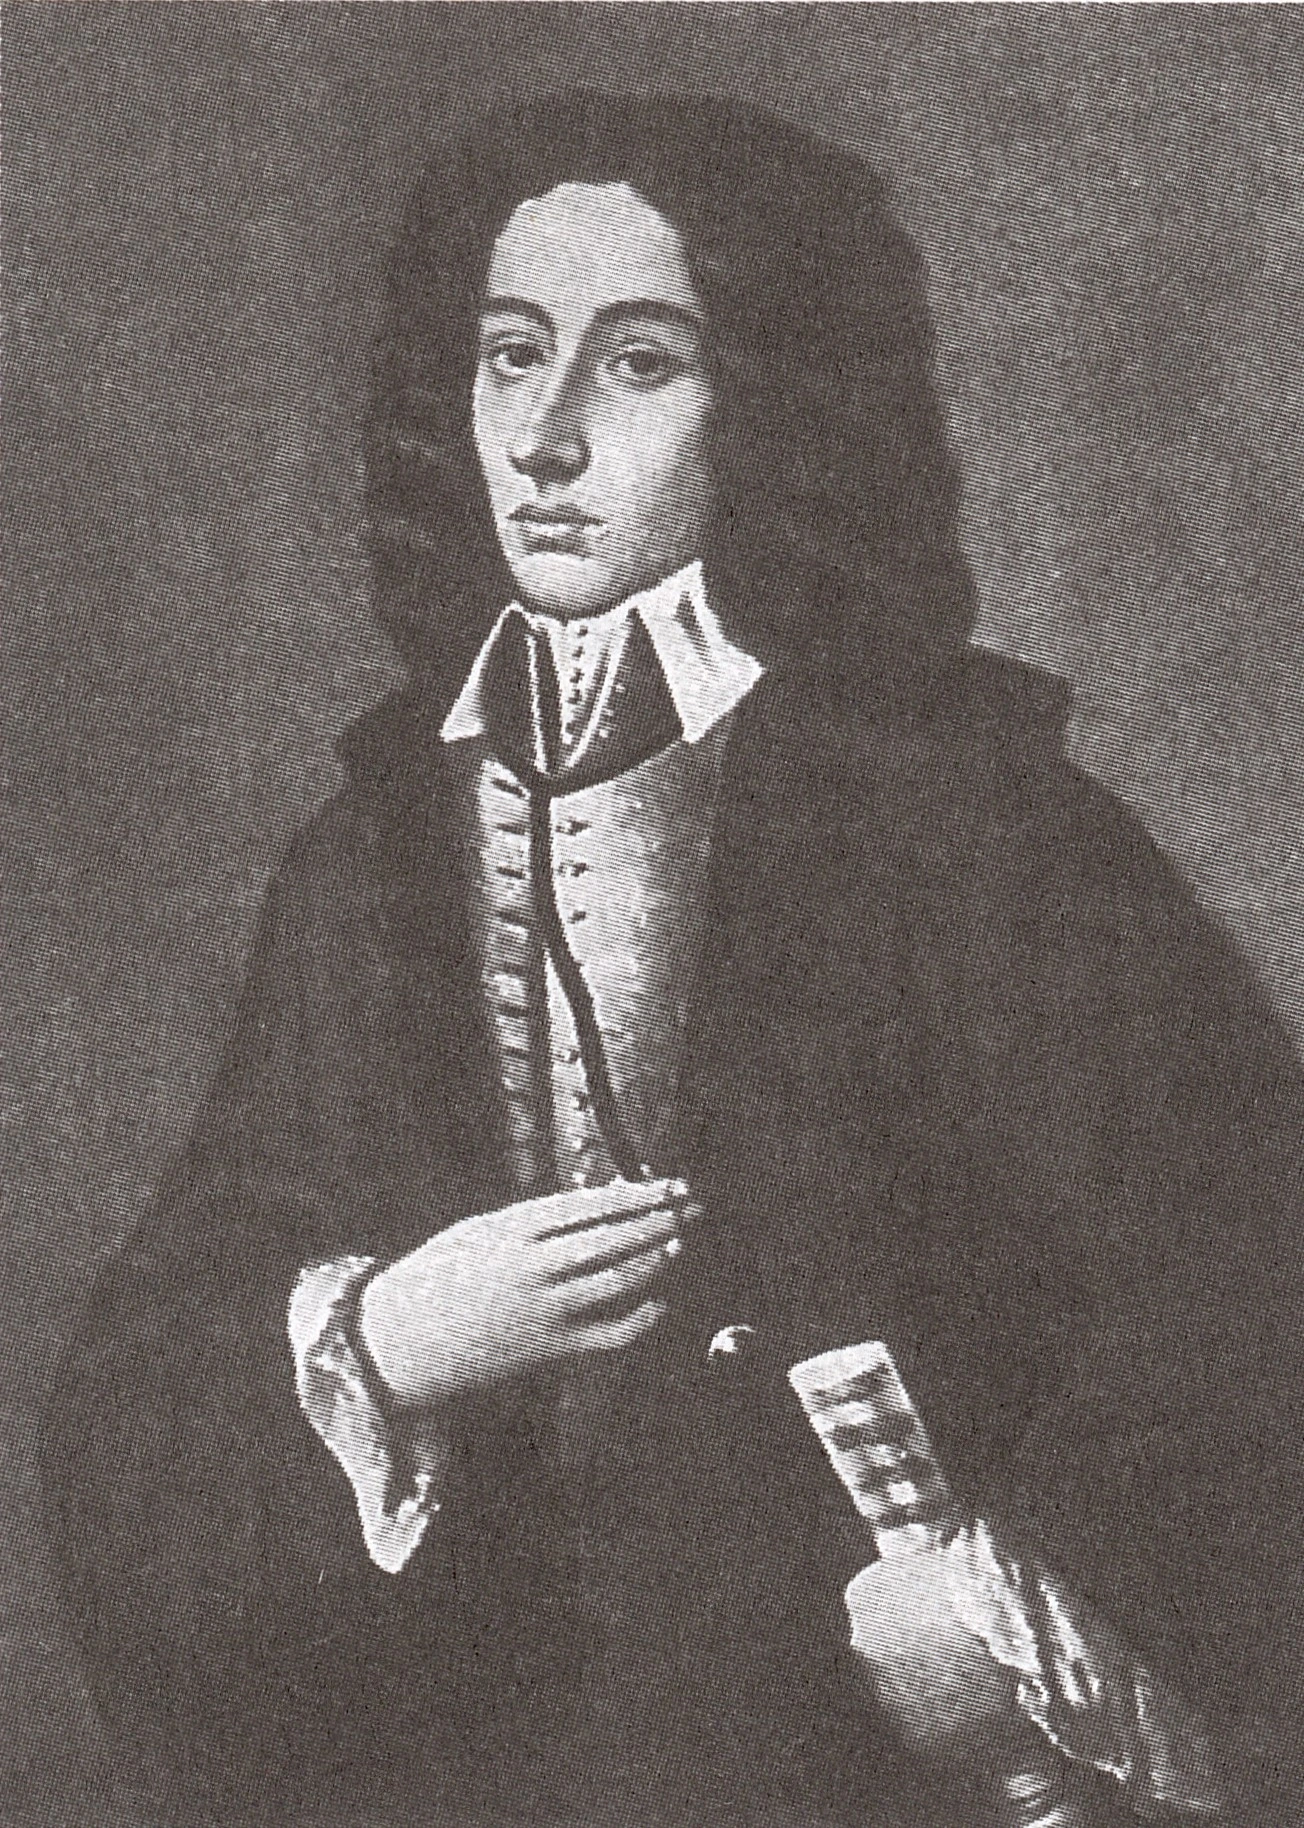 Pergolesi, Giovanni Battista